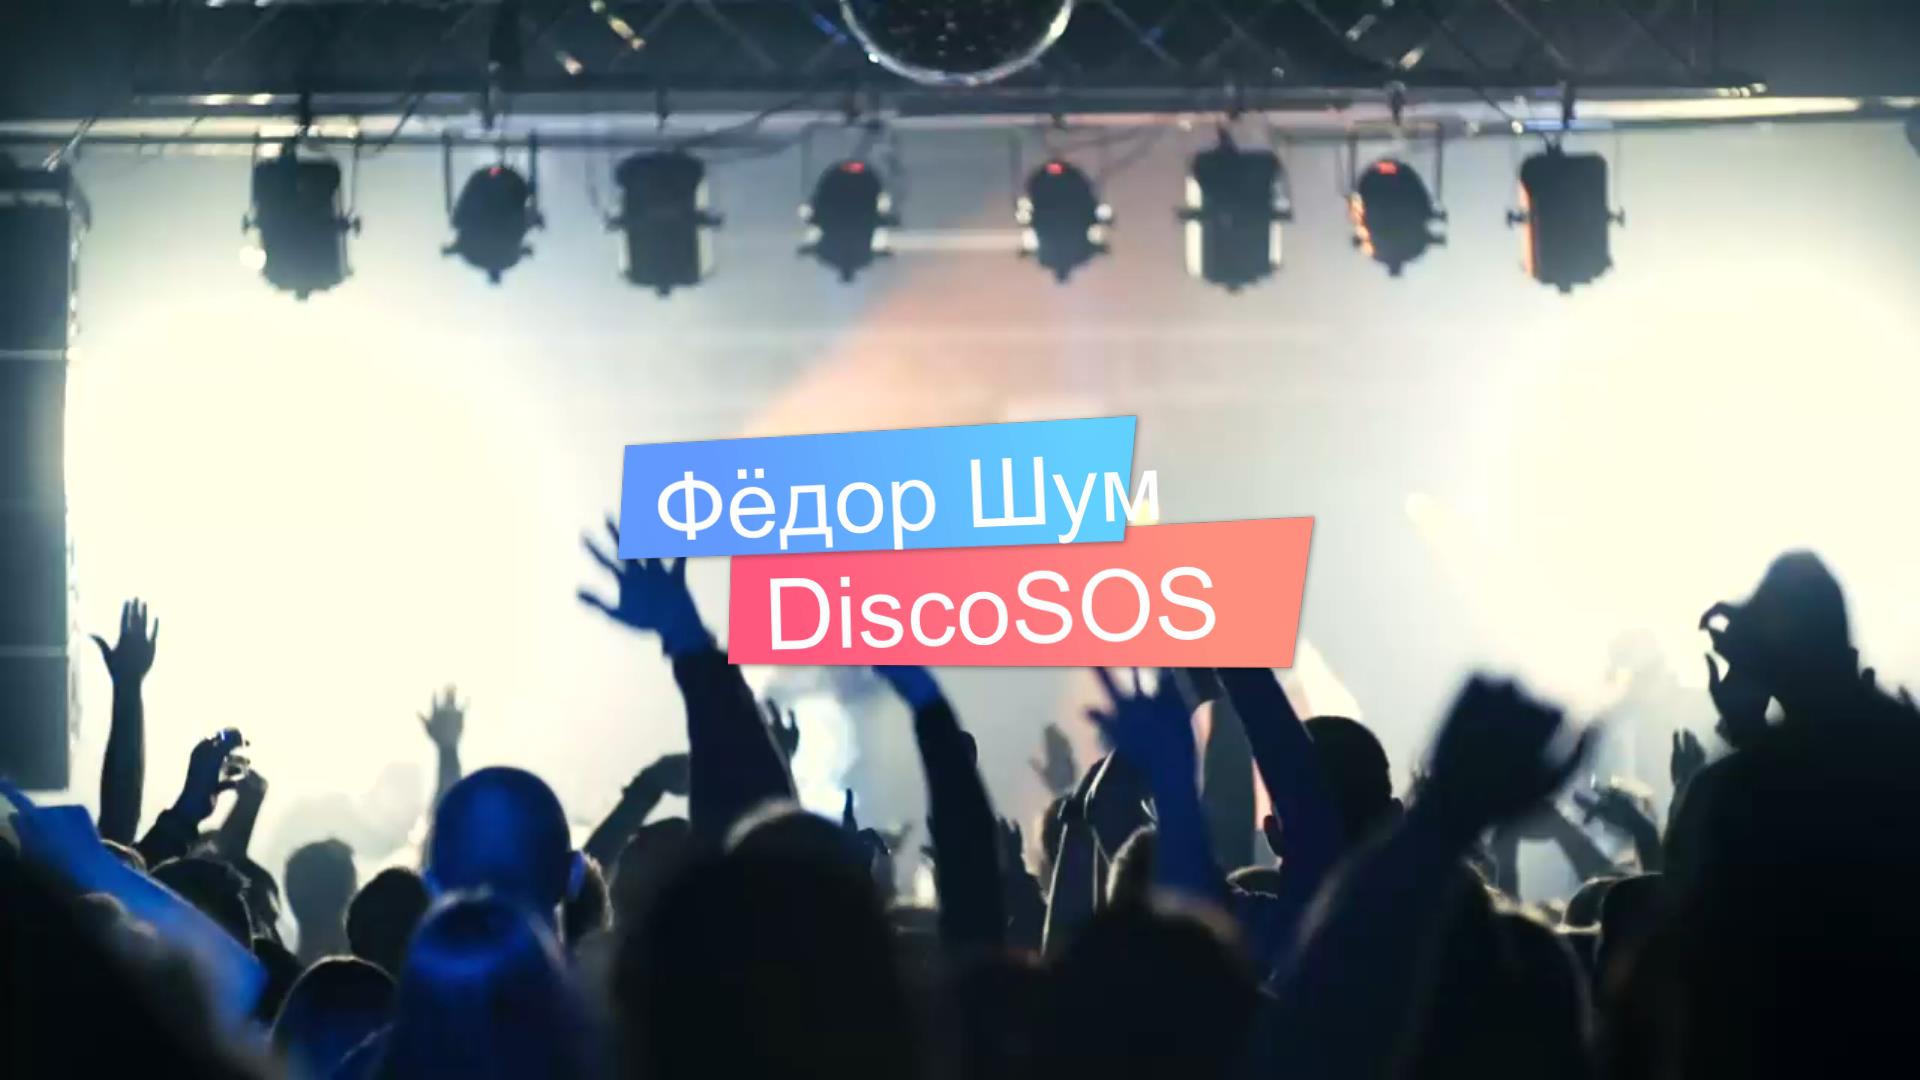 "DiscoSOS" (музыка и нафталин от Фёдора Шум)